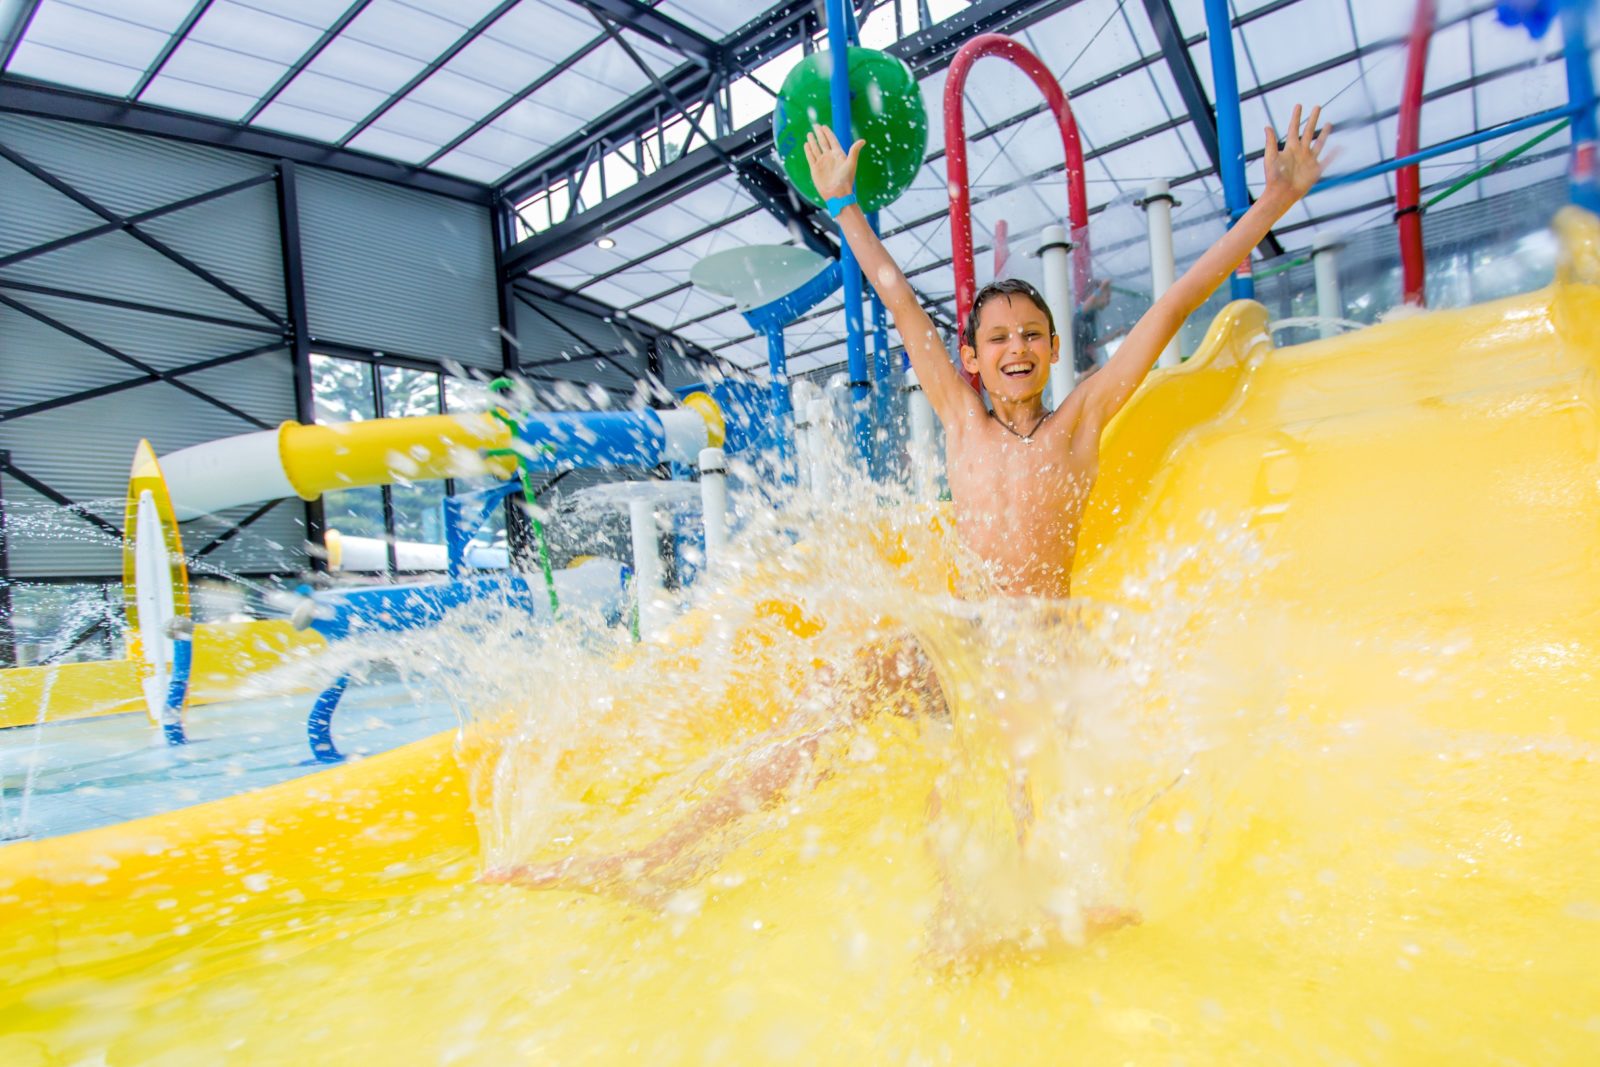 Boy sliding down indoor heated water slide. Water going everywhere, boy having so much fun!